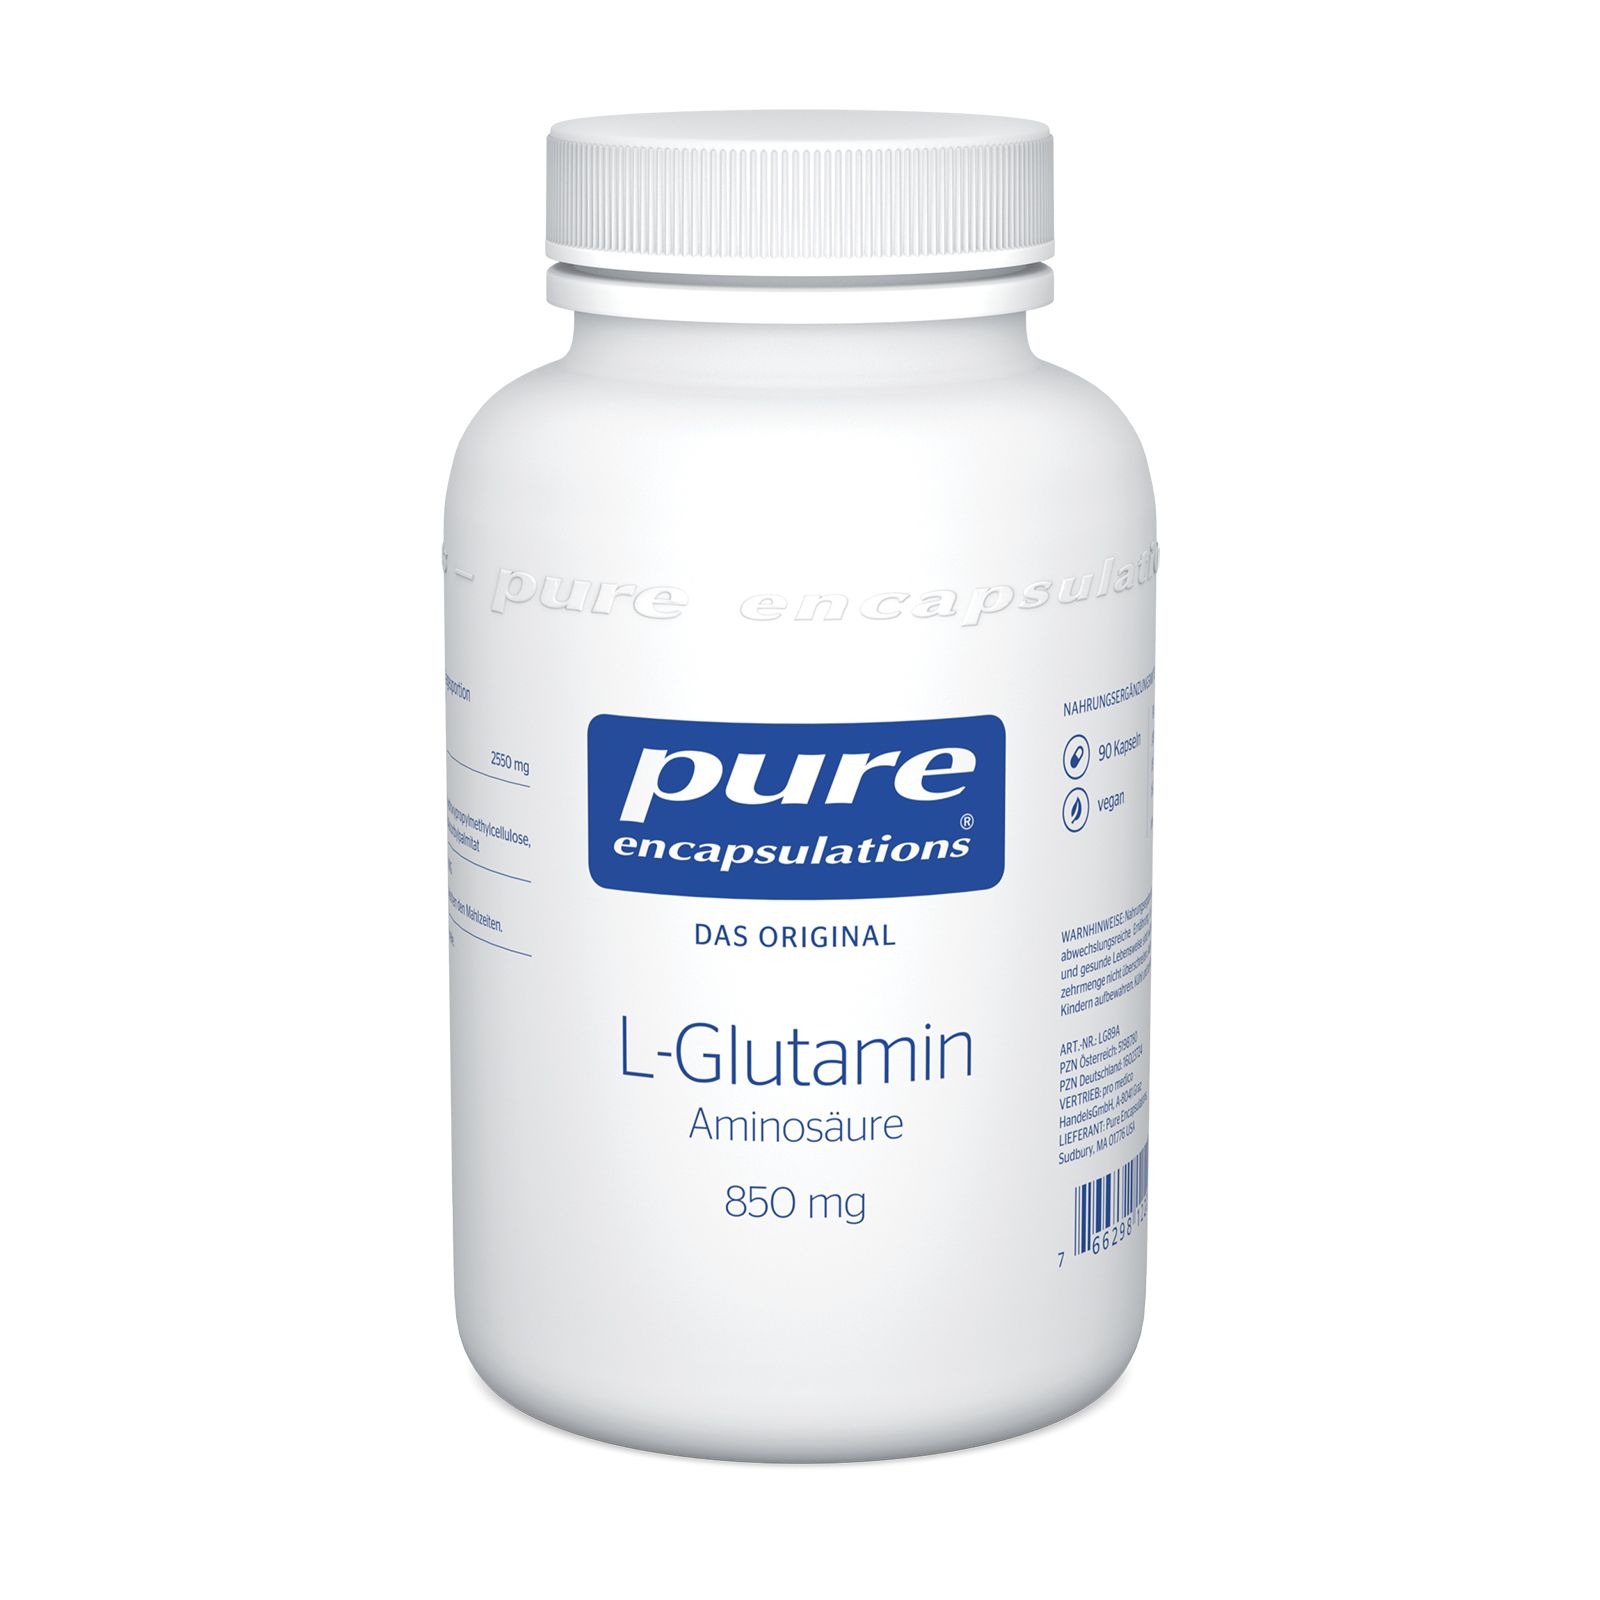 pure encapsulations® L-Glutamine Acides aminés